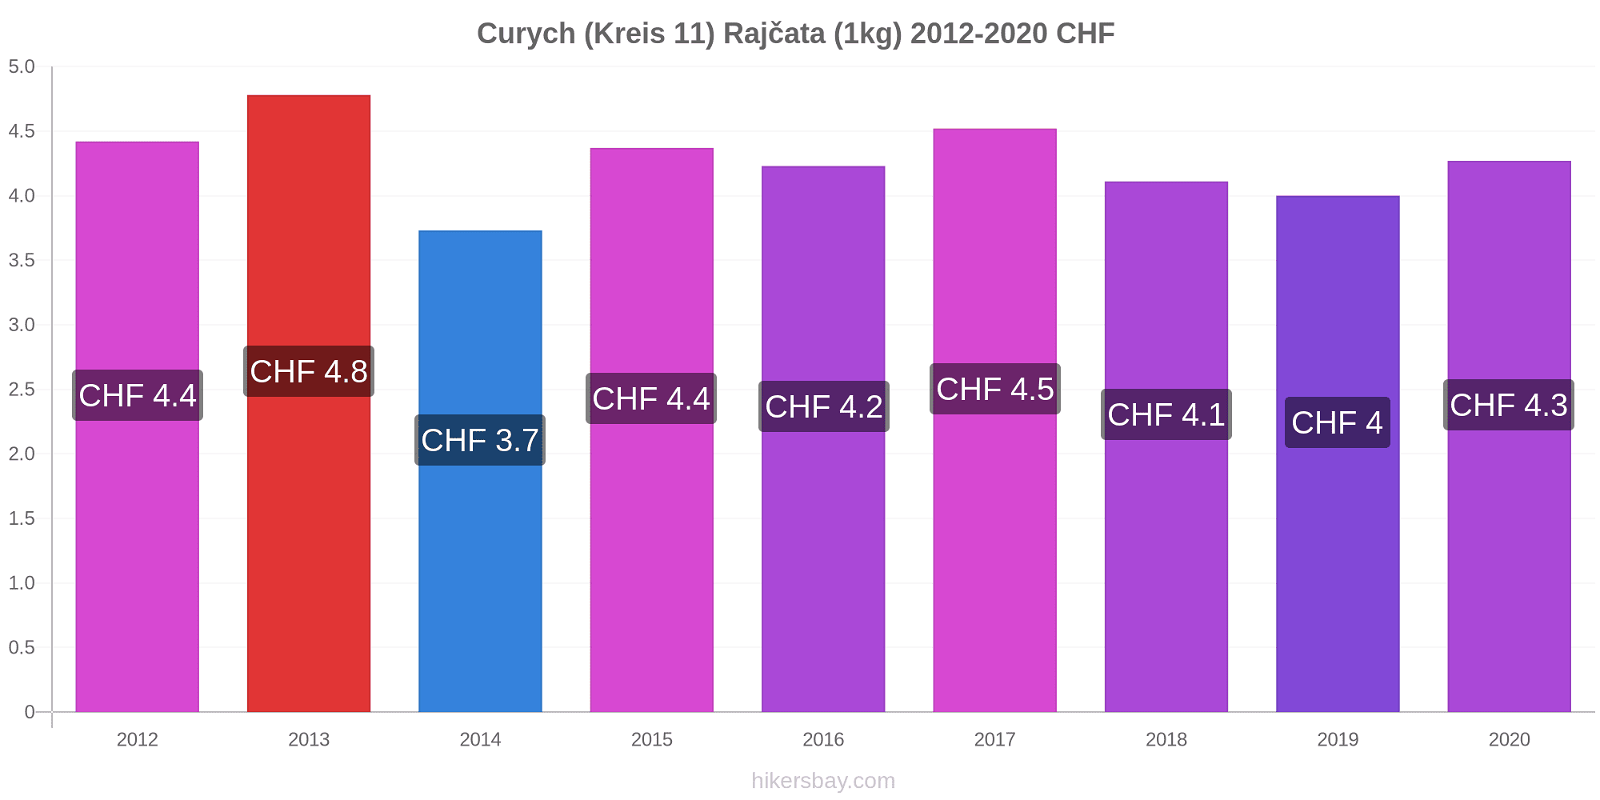 Curych (Kreis 11) změny cen Rajčata (1kg) hikersbay.com